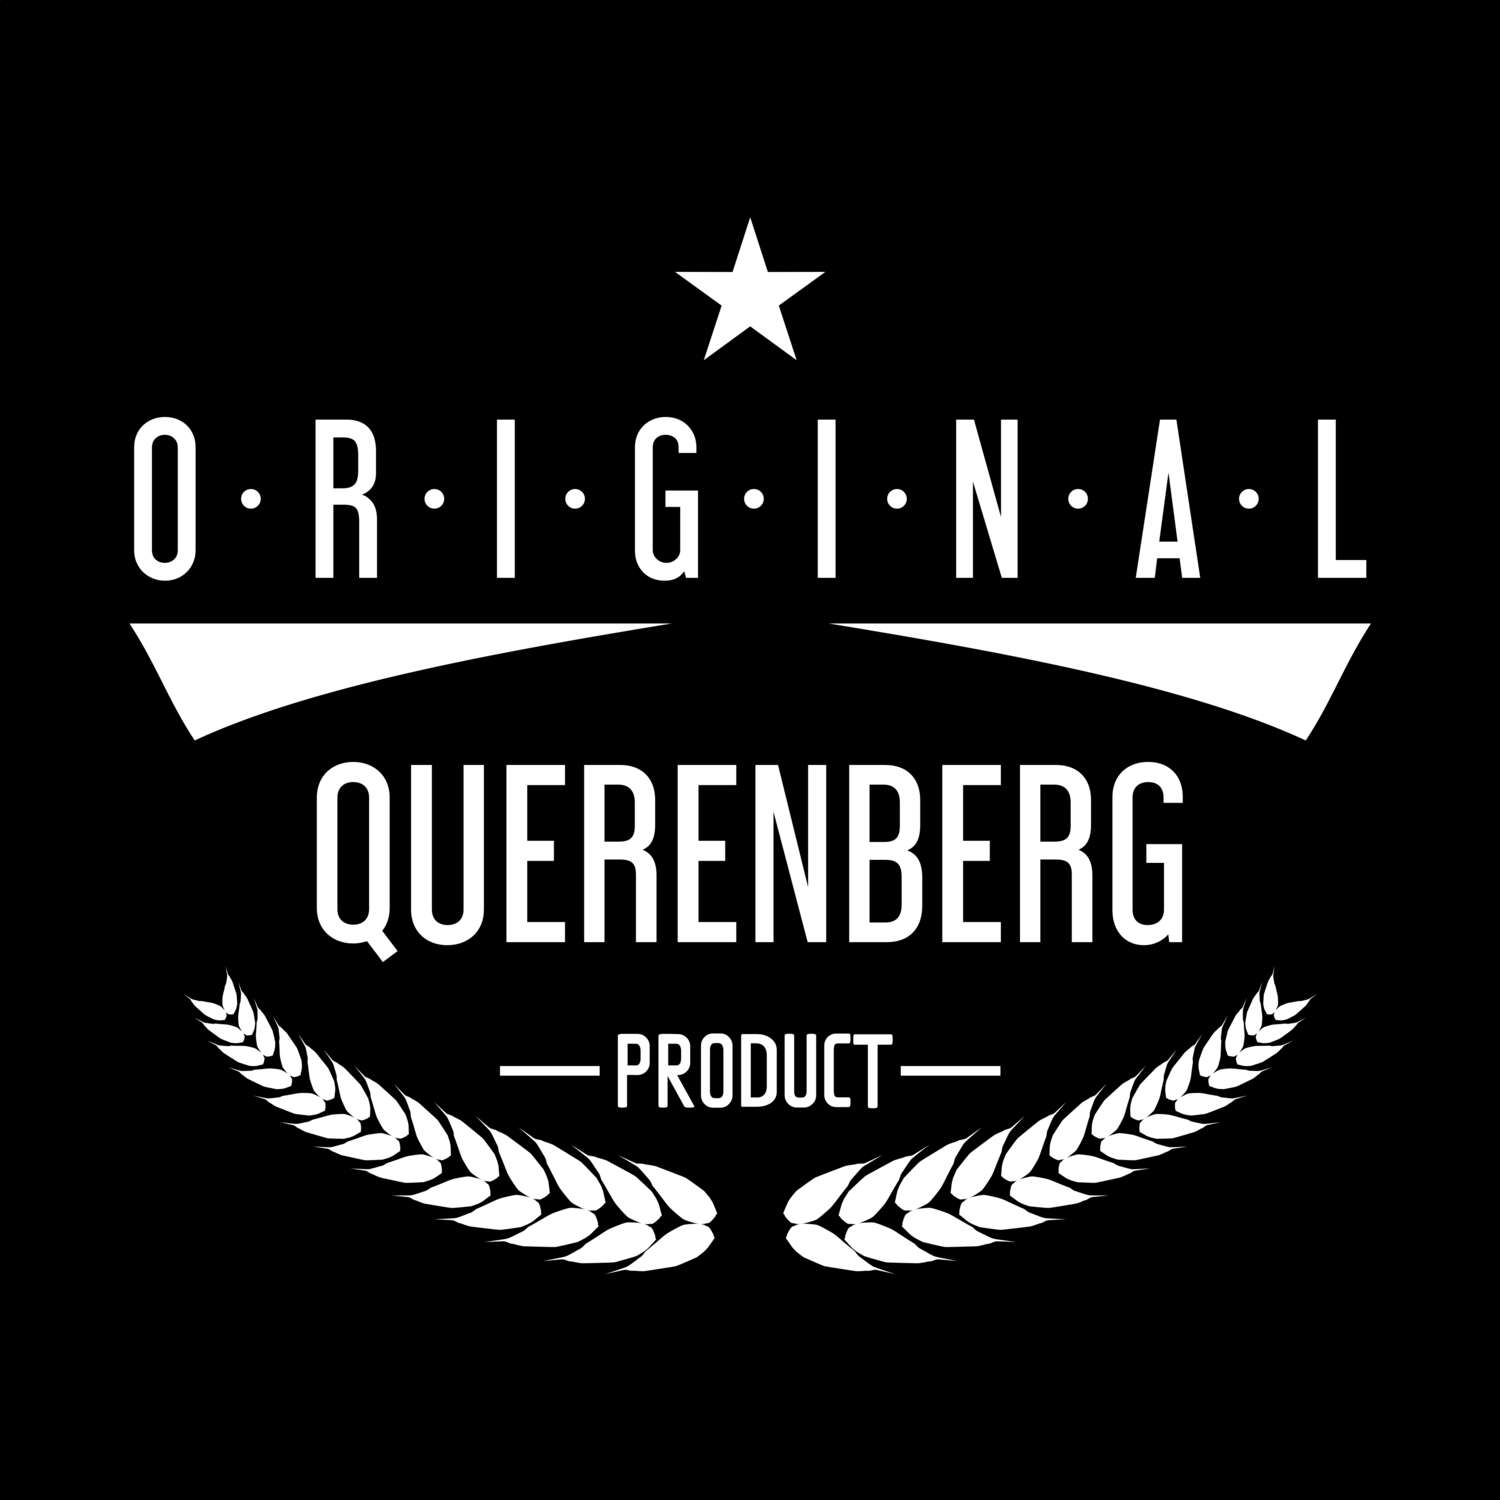 Querenberg T-Shirt »Original Product«